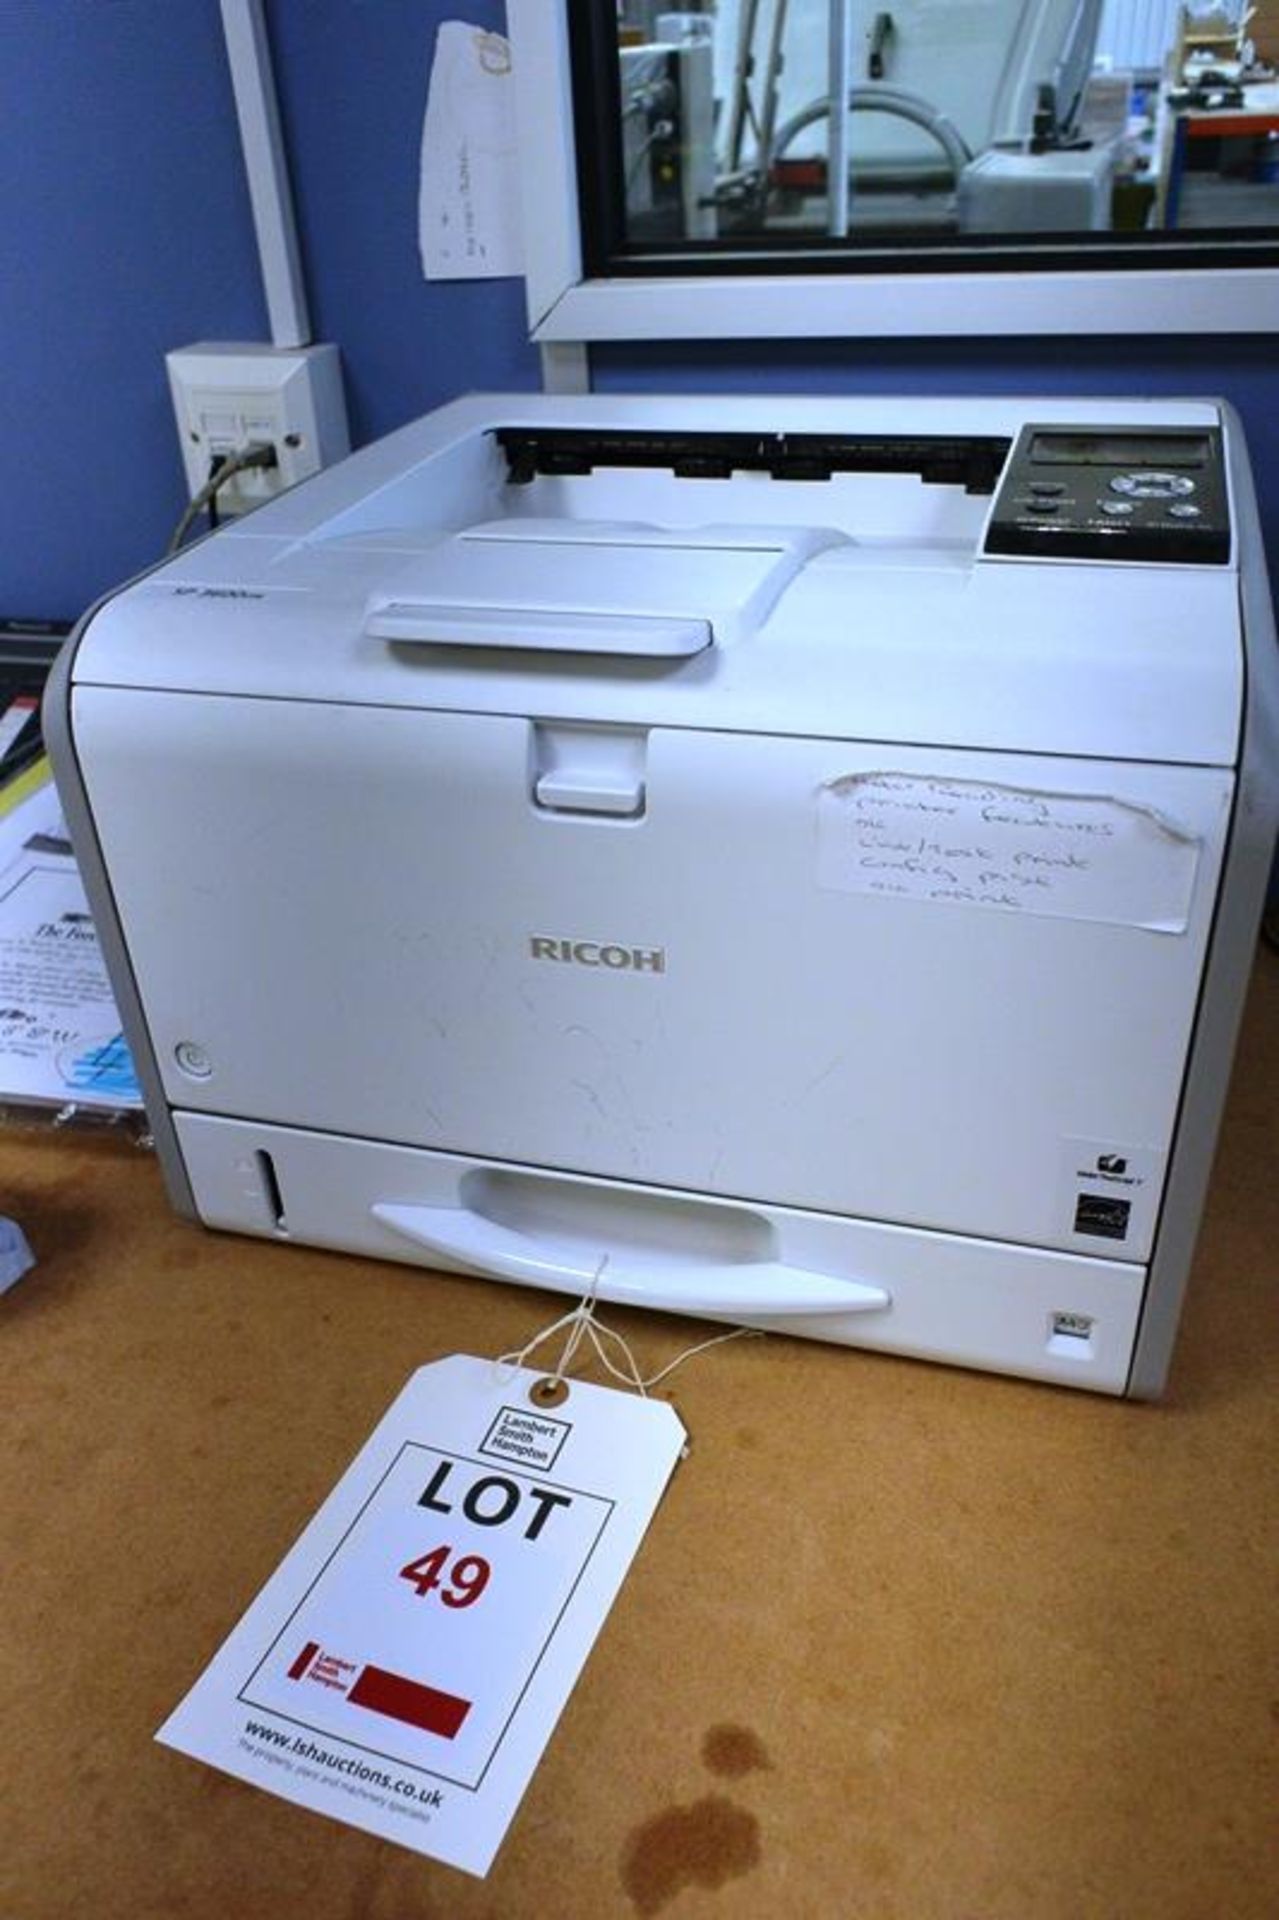 Ricoh SP 3600 DN laser printer